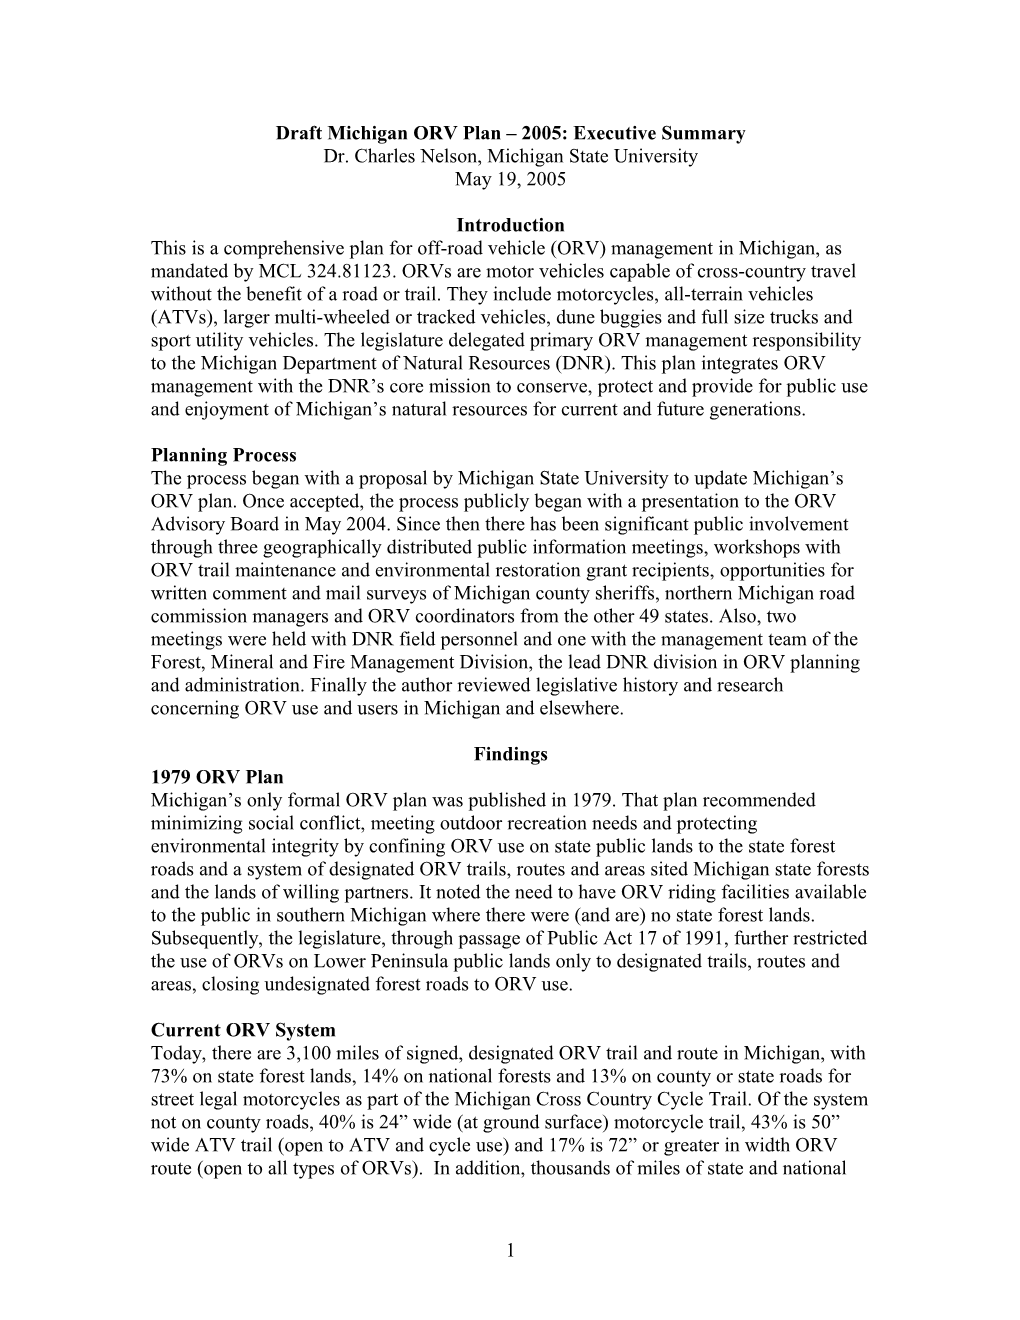 Draft ORV Plan 2005 Executive Summary